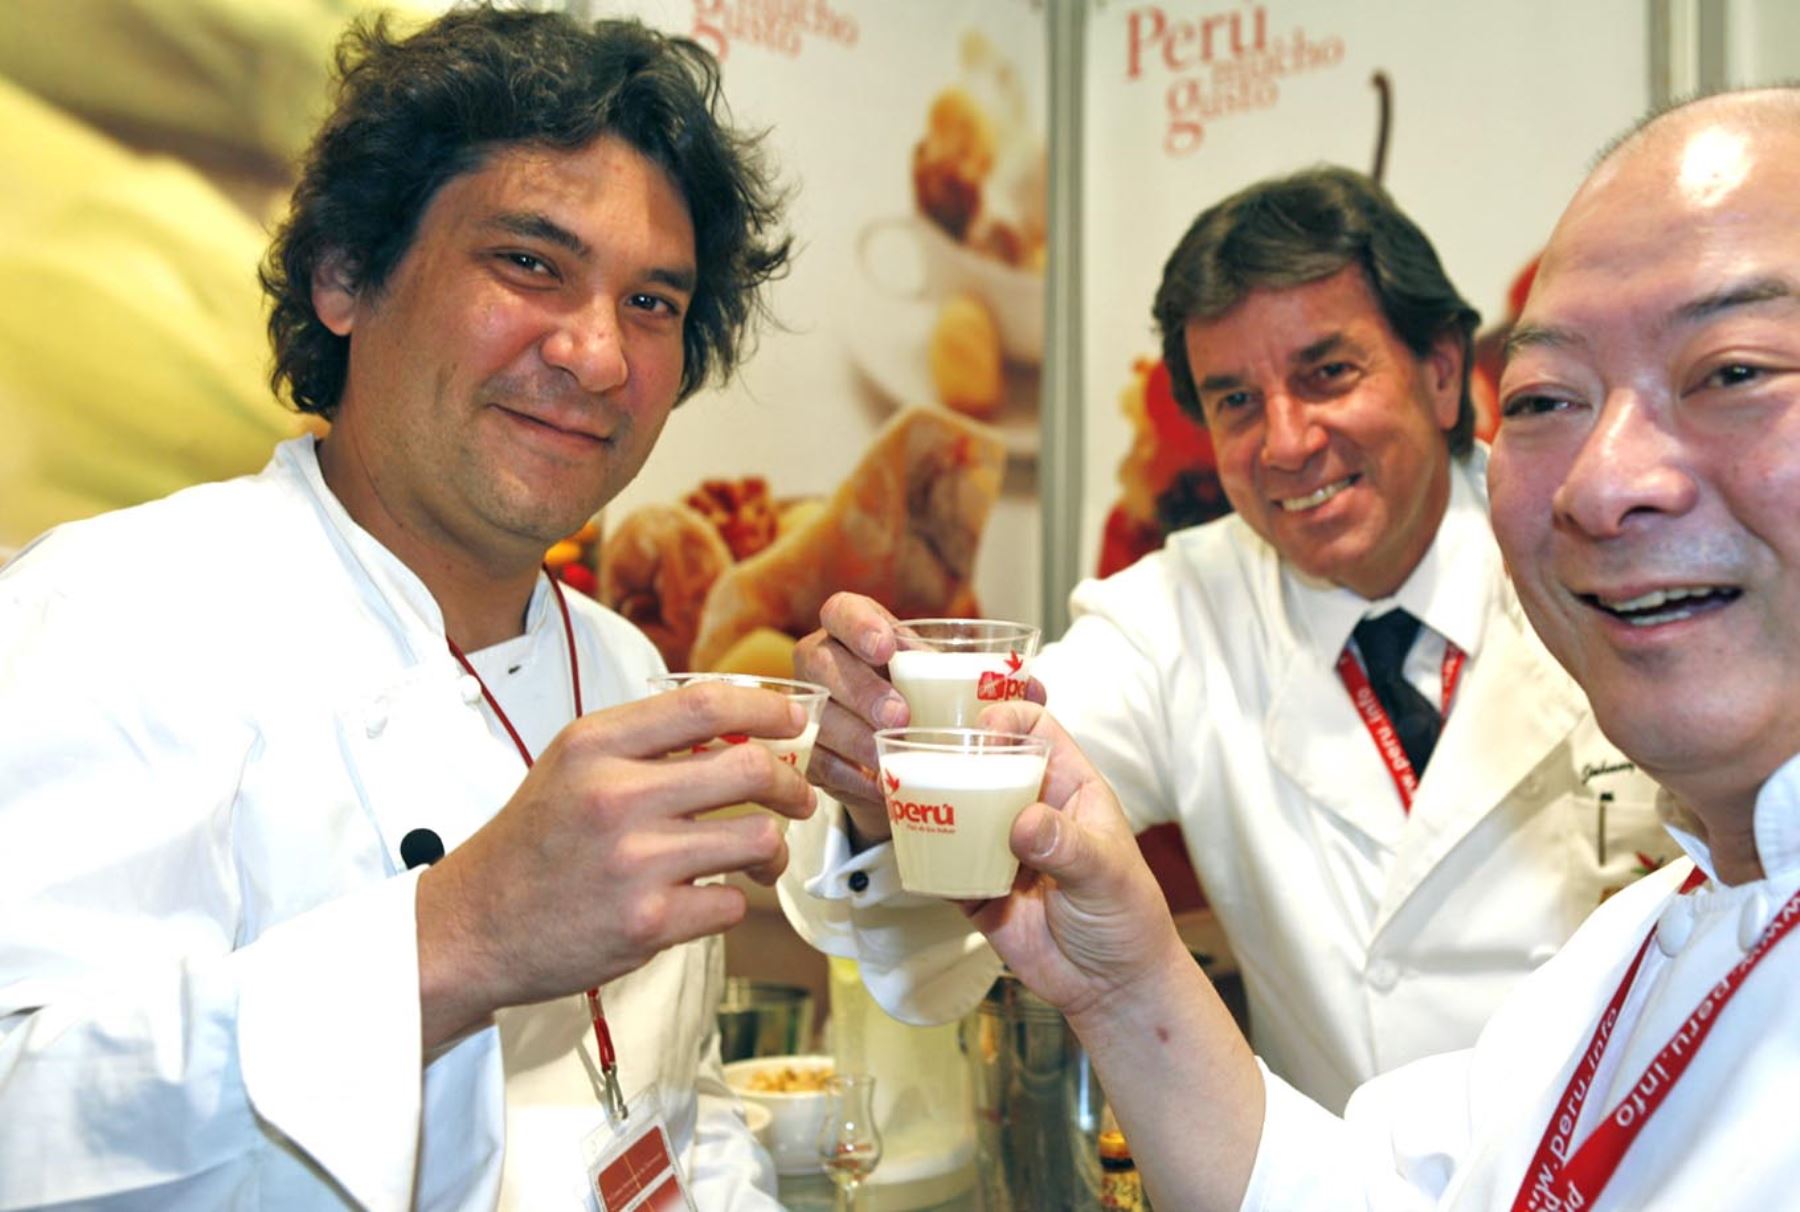 Renowned Peruvian chef Gaston Acurio (left)